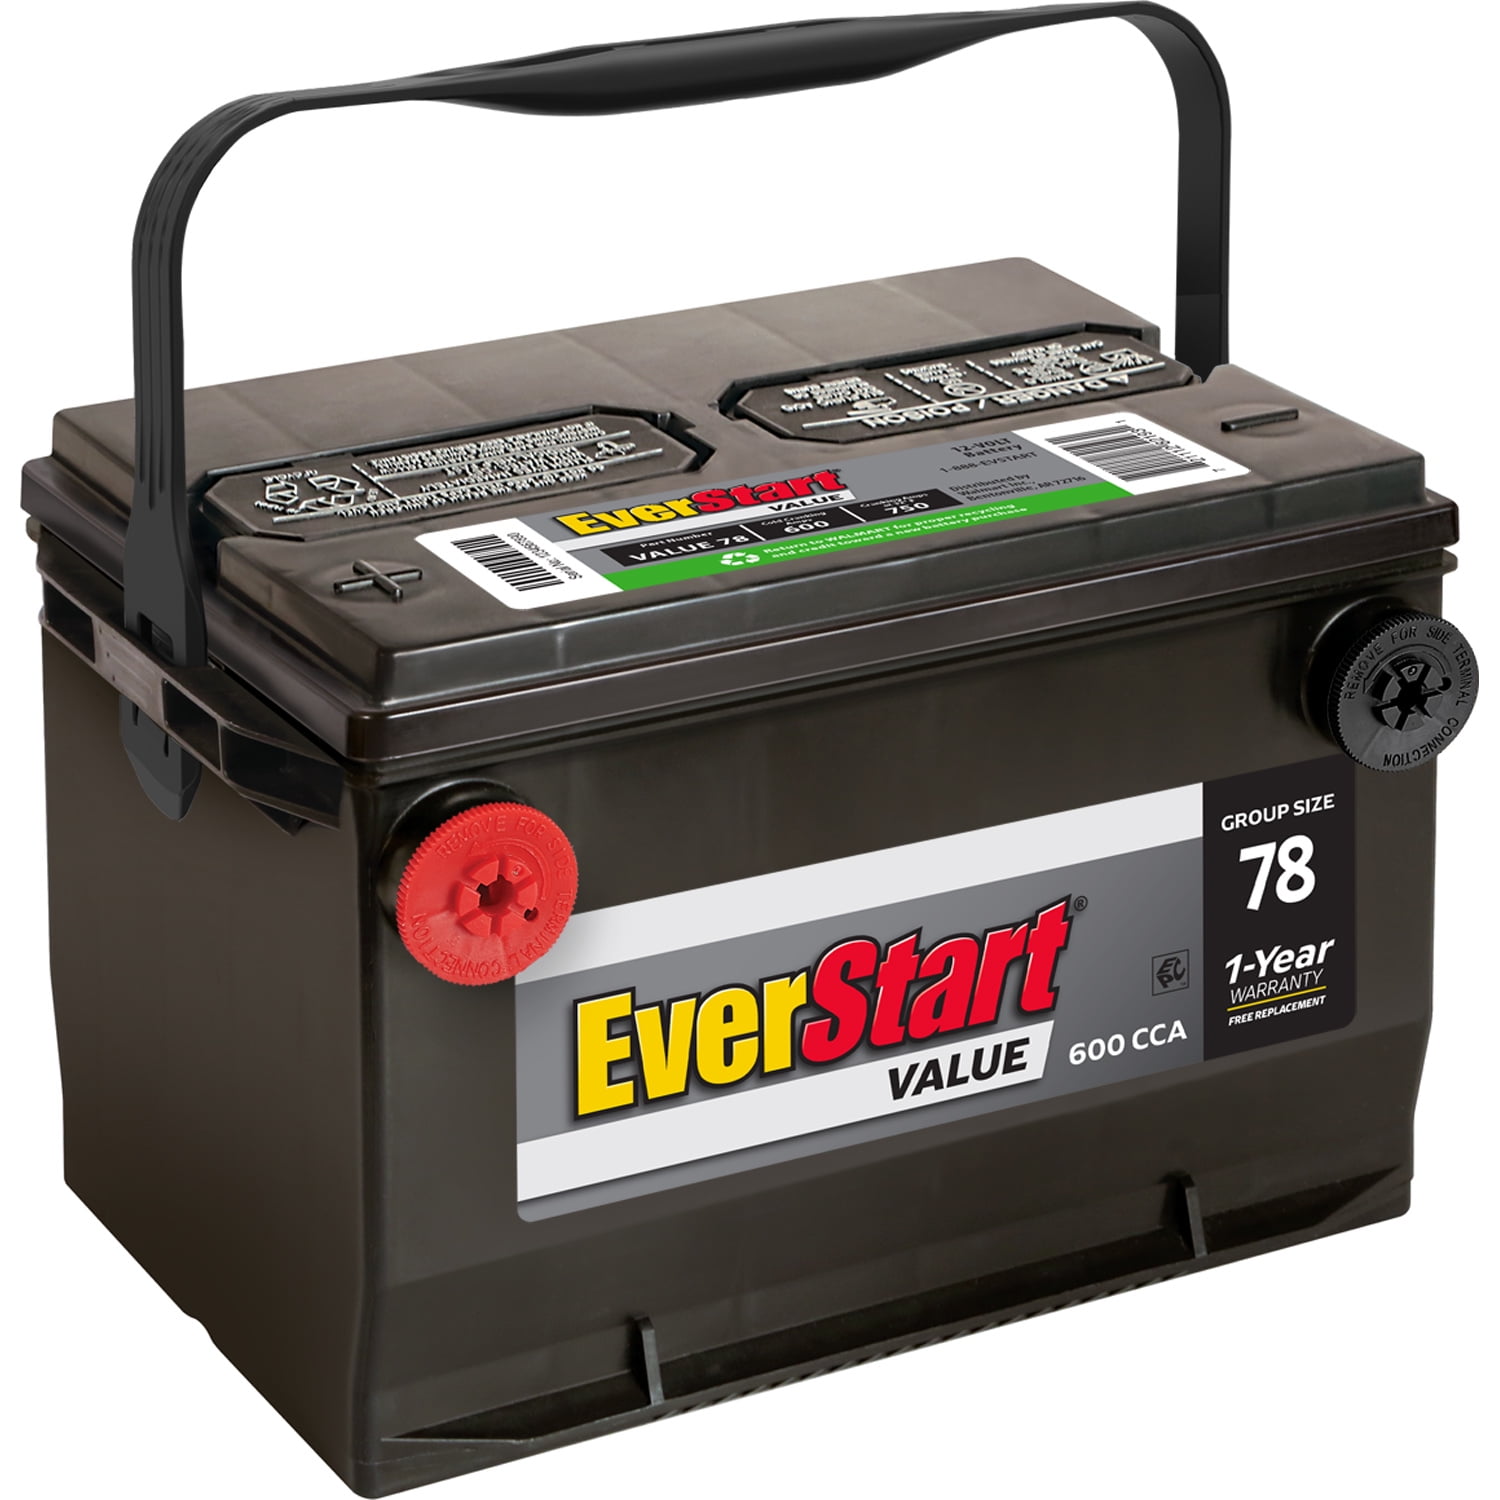 Everstart Value Lead Acid Automotive Battery, Group Size 78 12 Volt, 600 CCA, Size: VP-78, Black